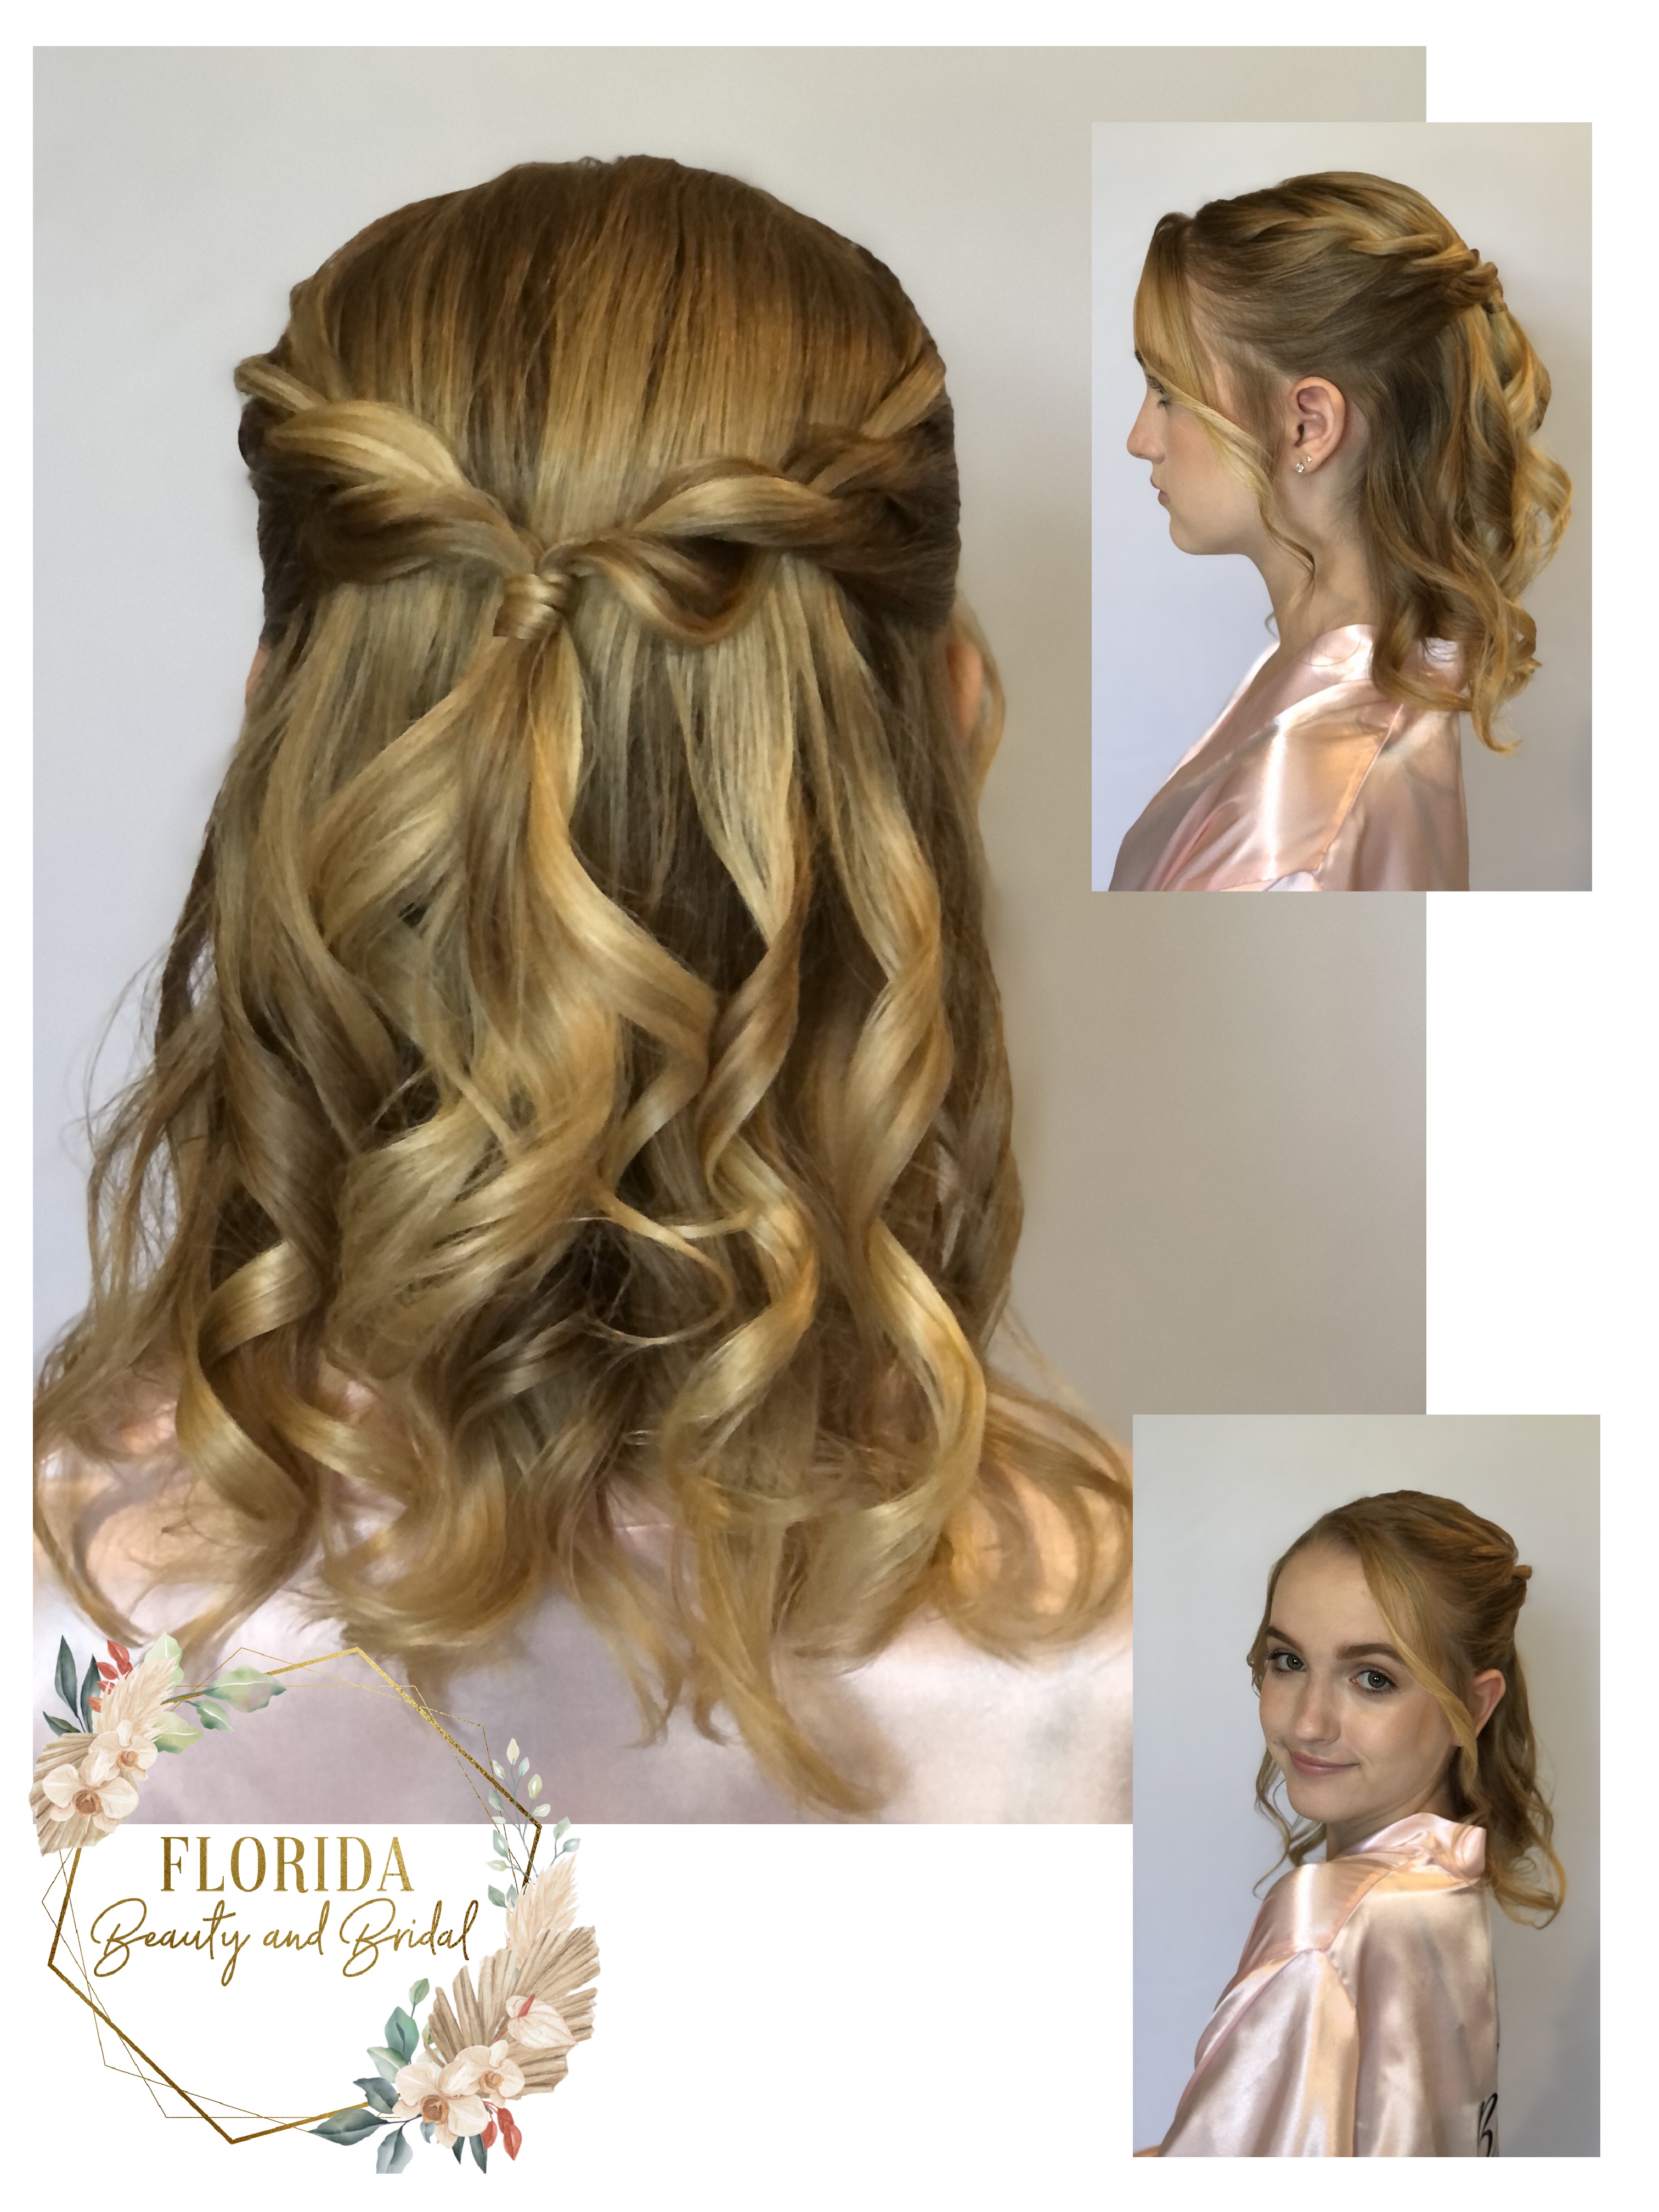 Portfolio - Florida Beauty and Bridal